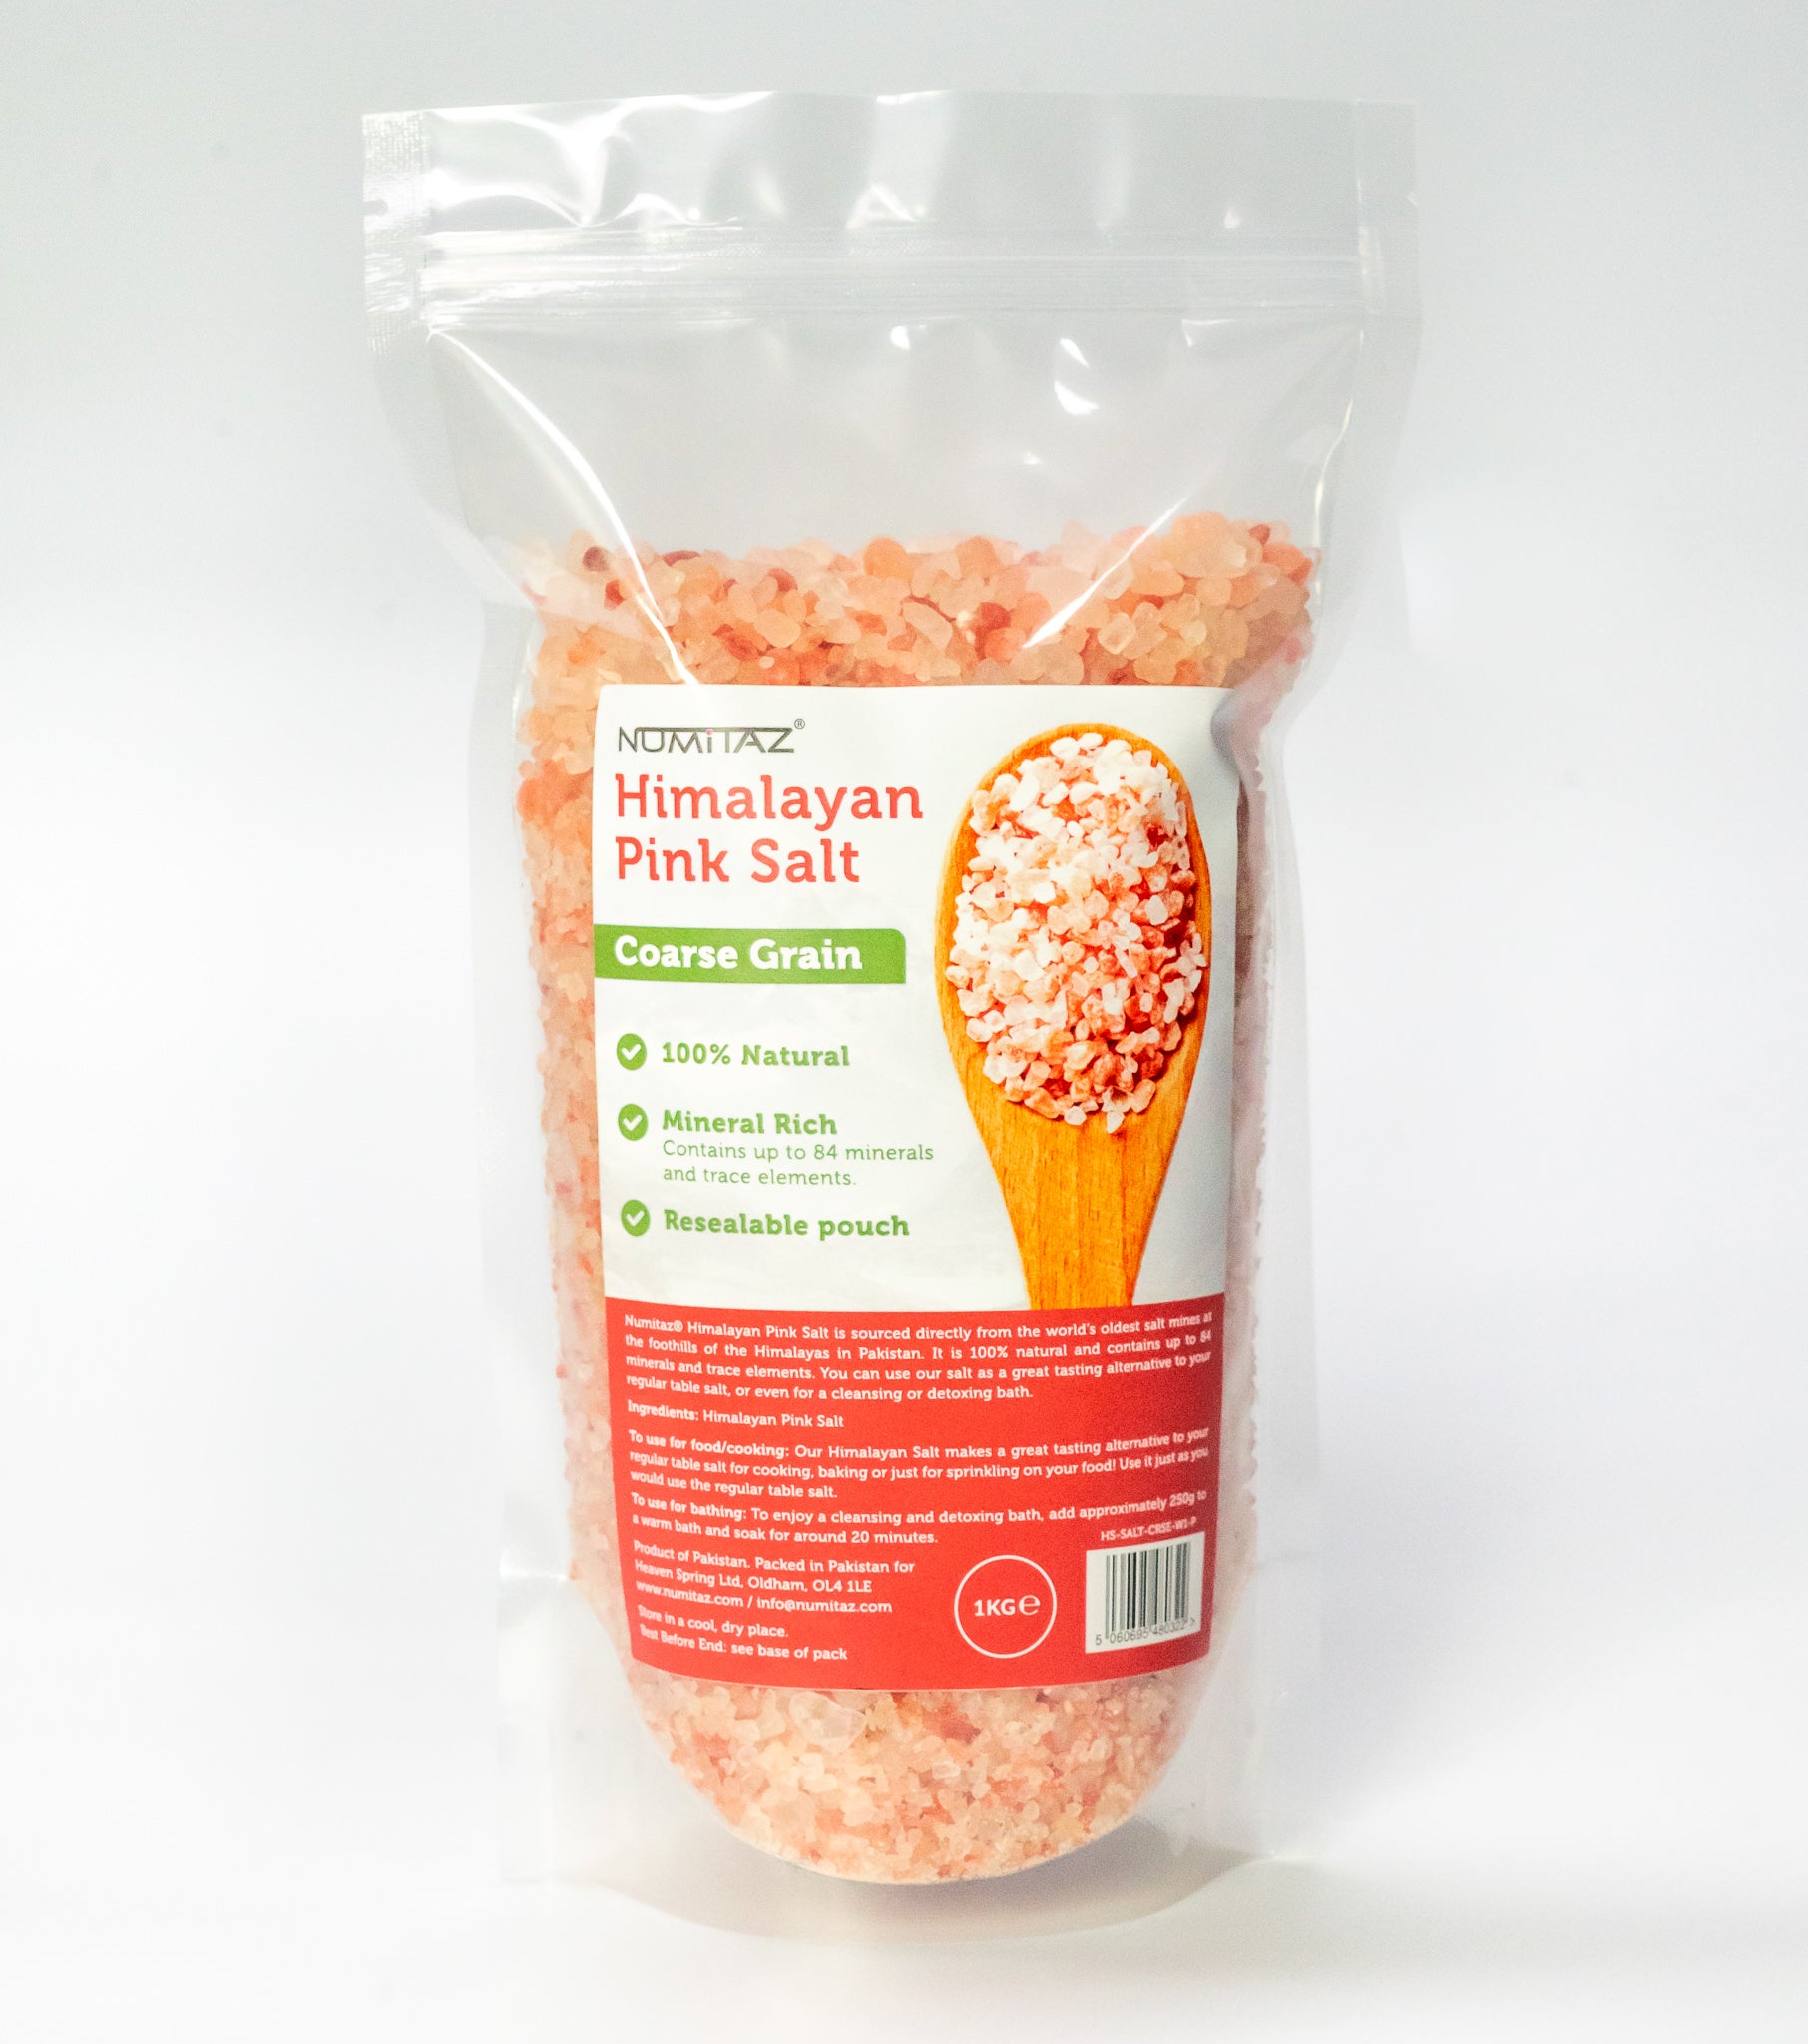 Numitaz Himalayan pink salt coarse 1kg - Case of 5